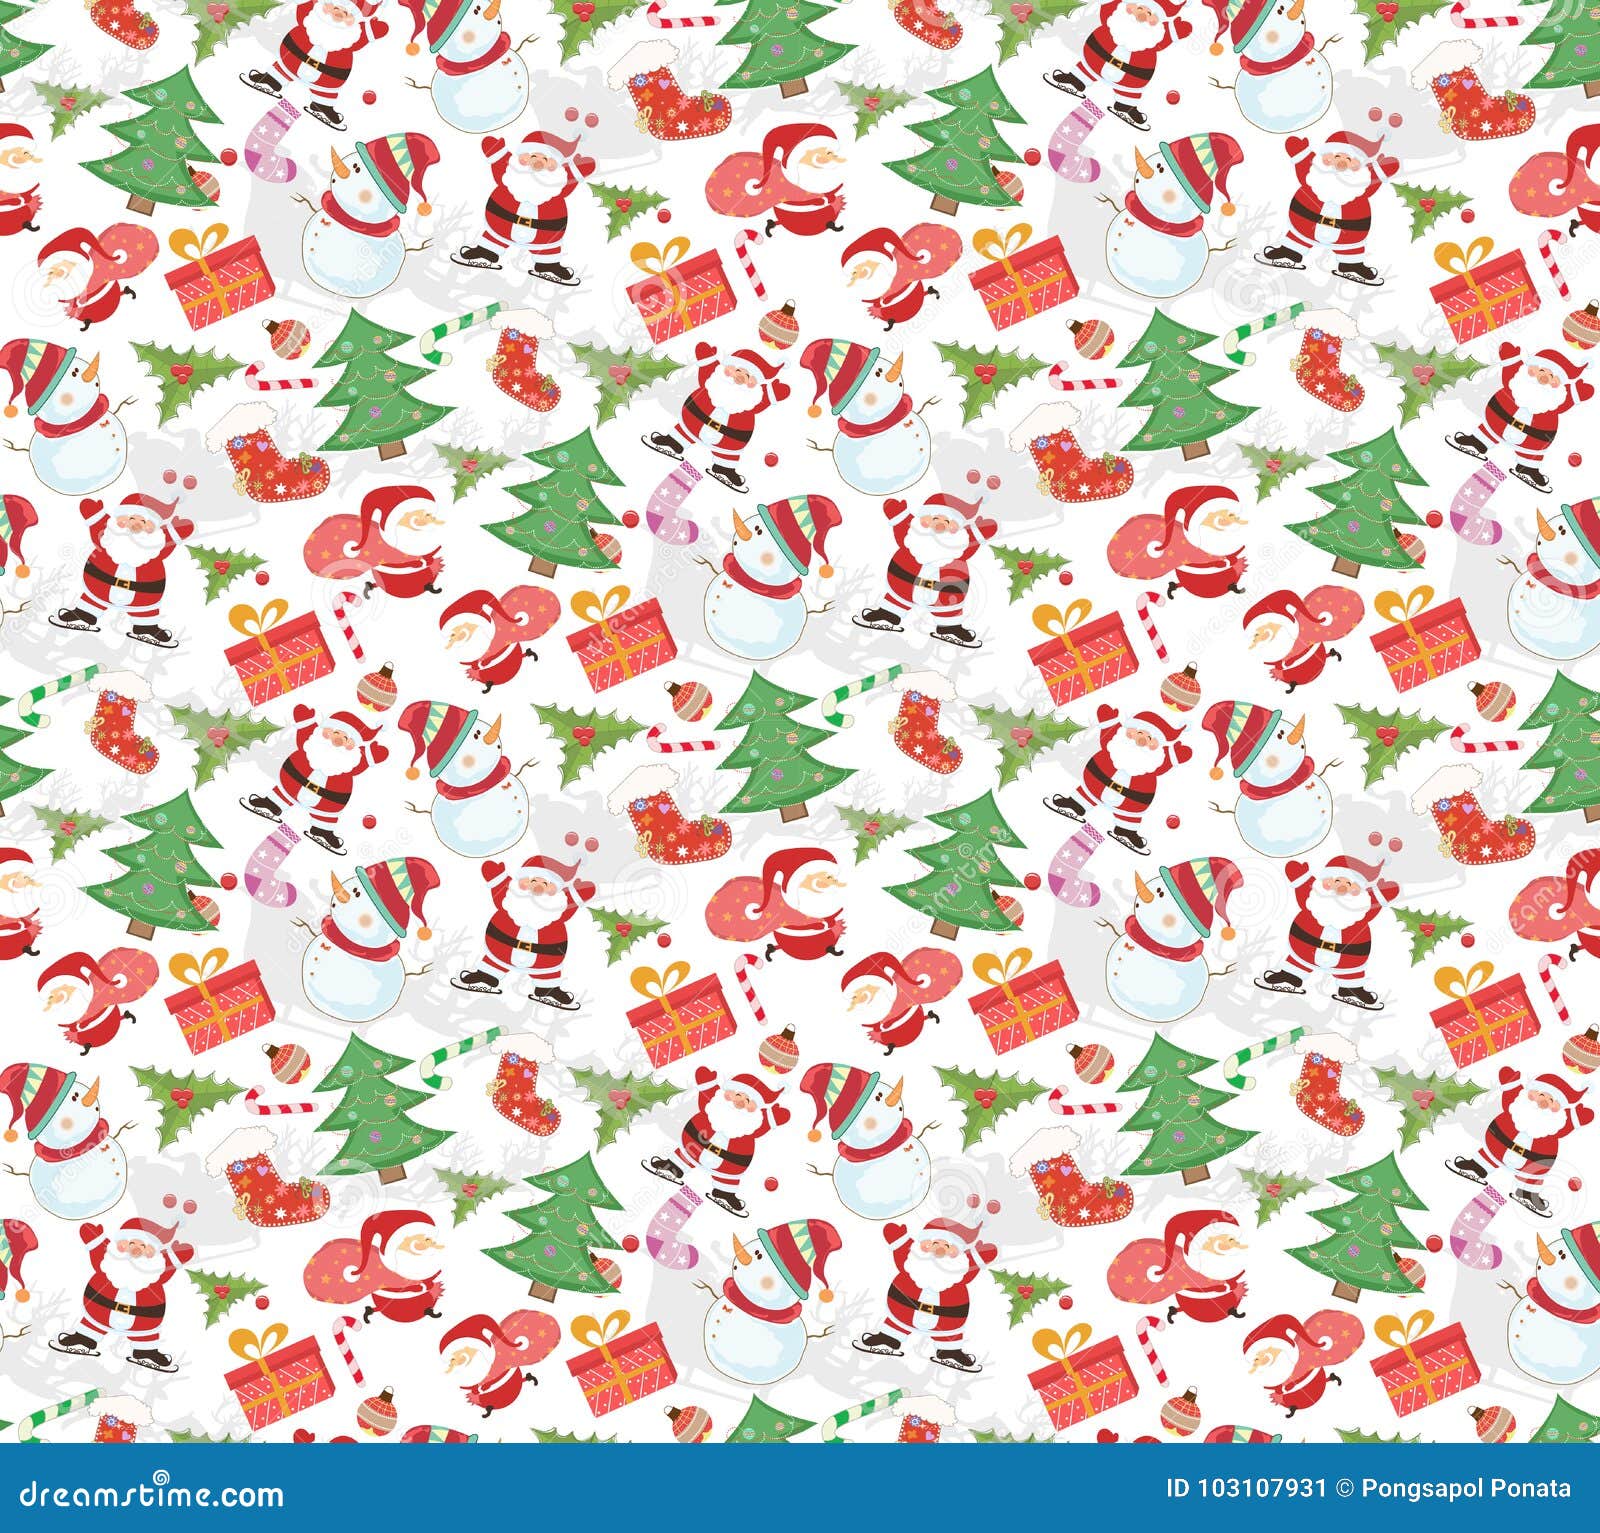 Christmas pattern seamless stock illustration. Illustration of flat ...